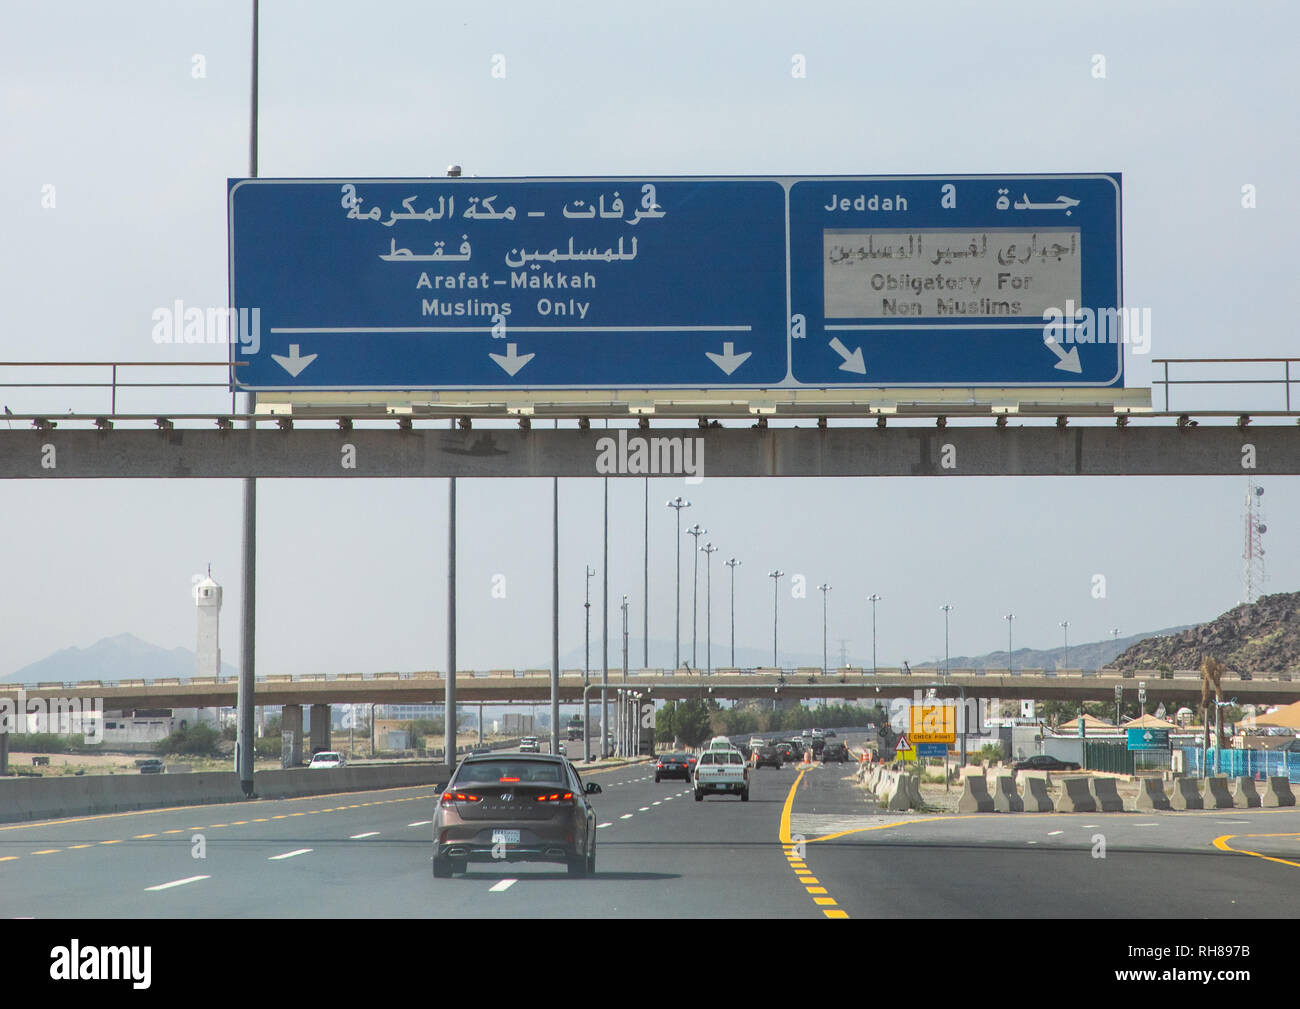 Дорога в мекку. Ворота Мекки. Makkah дорожный указатель. Въезд в Мекку.